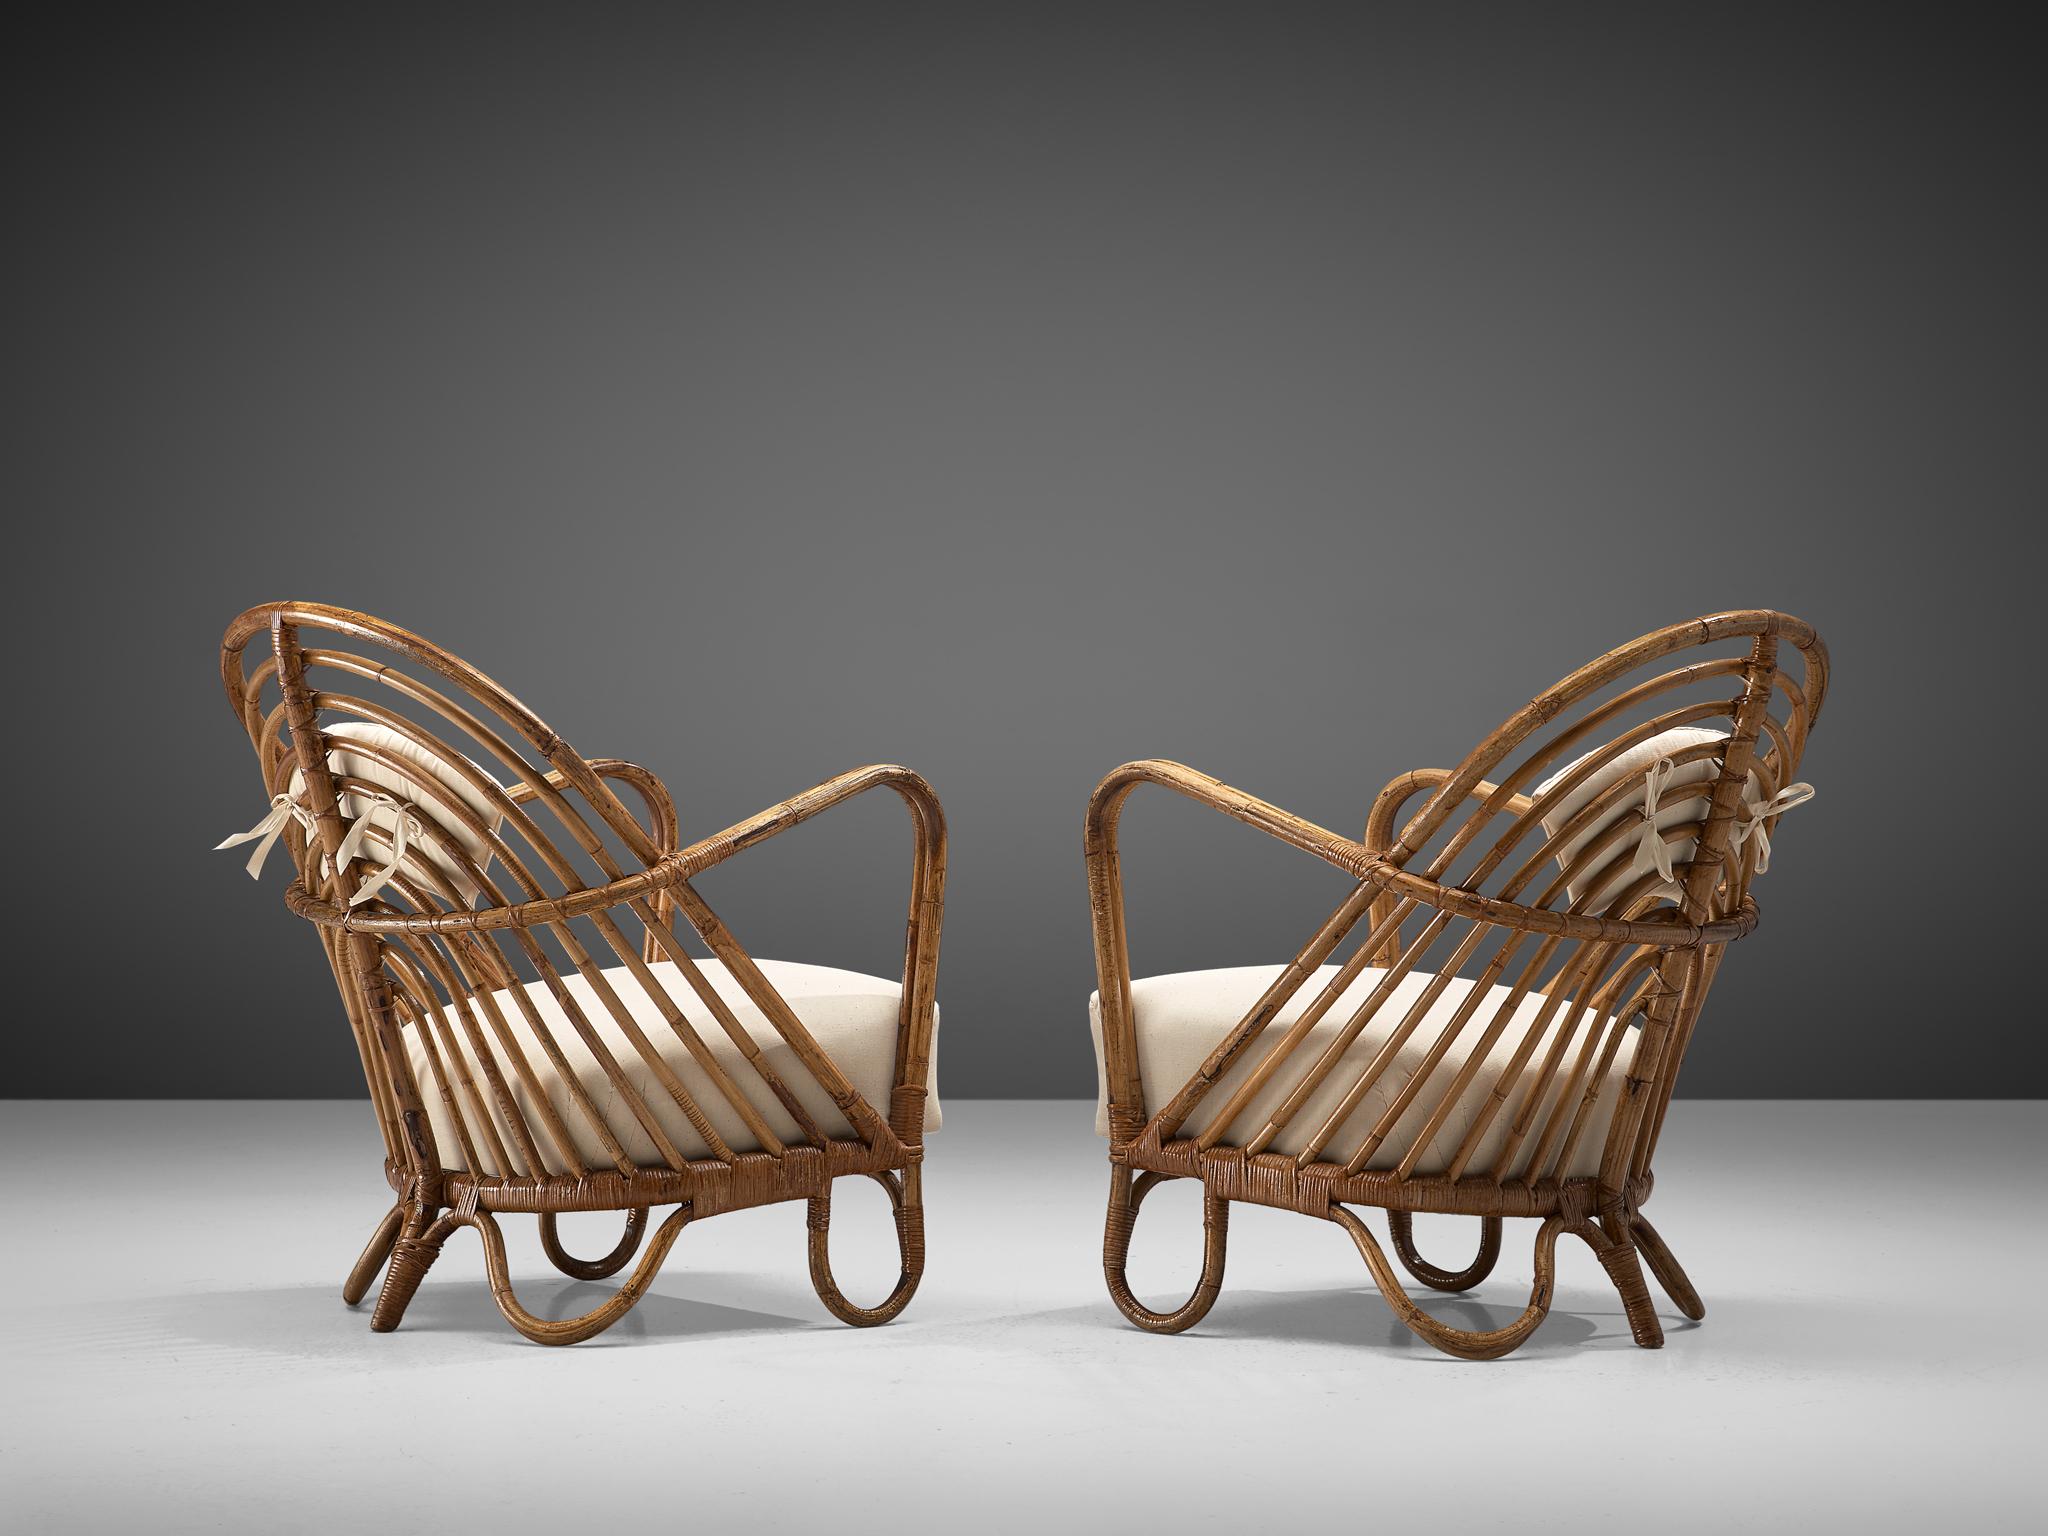 Scandinavian Modern Pair of Wicker Lounge Chairs, Denmark, 1940s